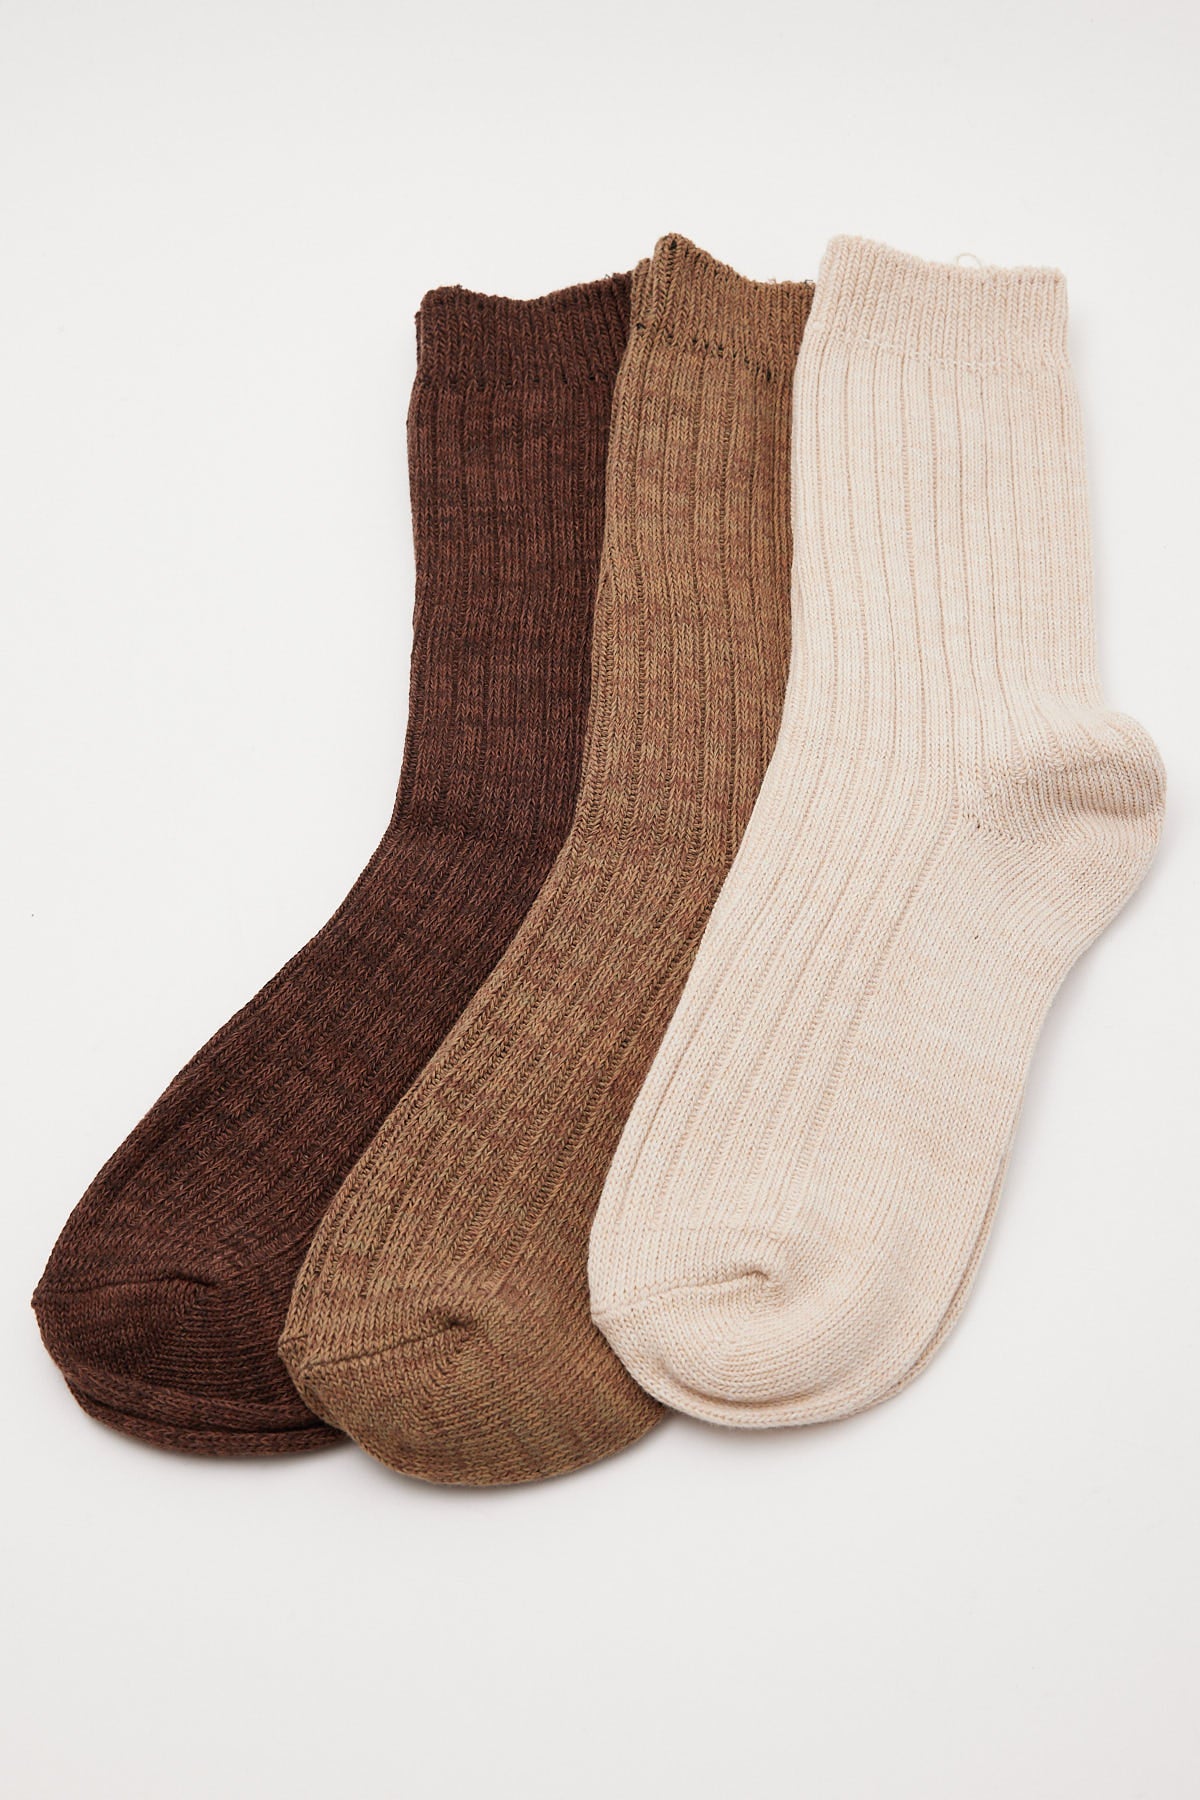 Common Need Marle Socks 3 Pack Natural/Choc/Sage